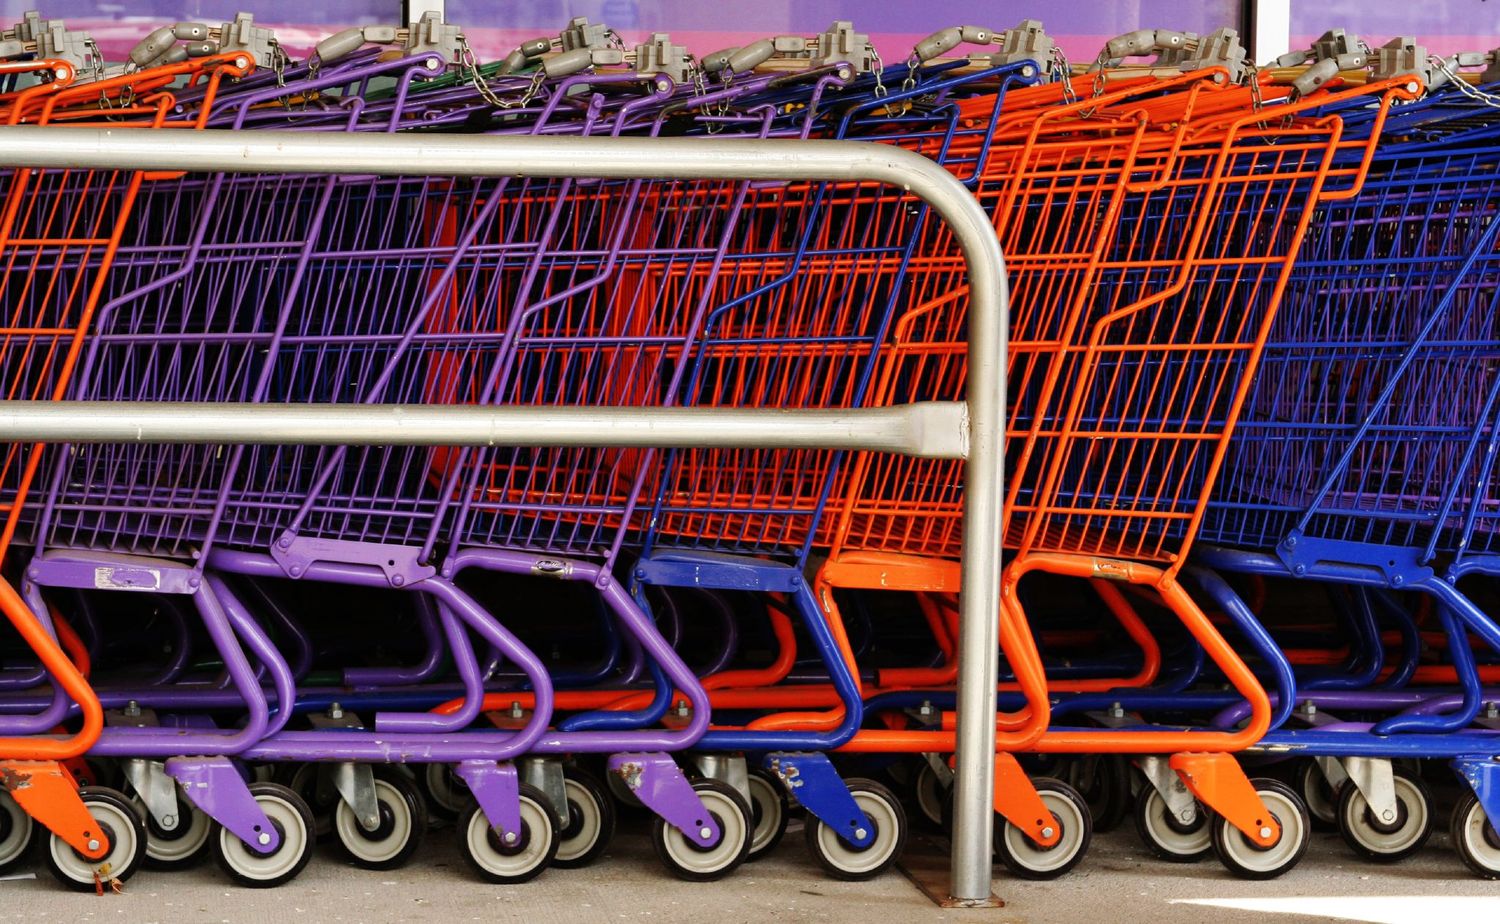 A row of shopping carts